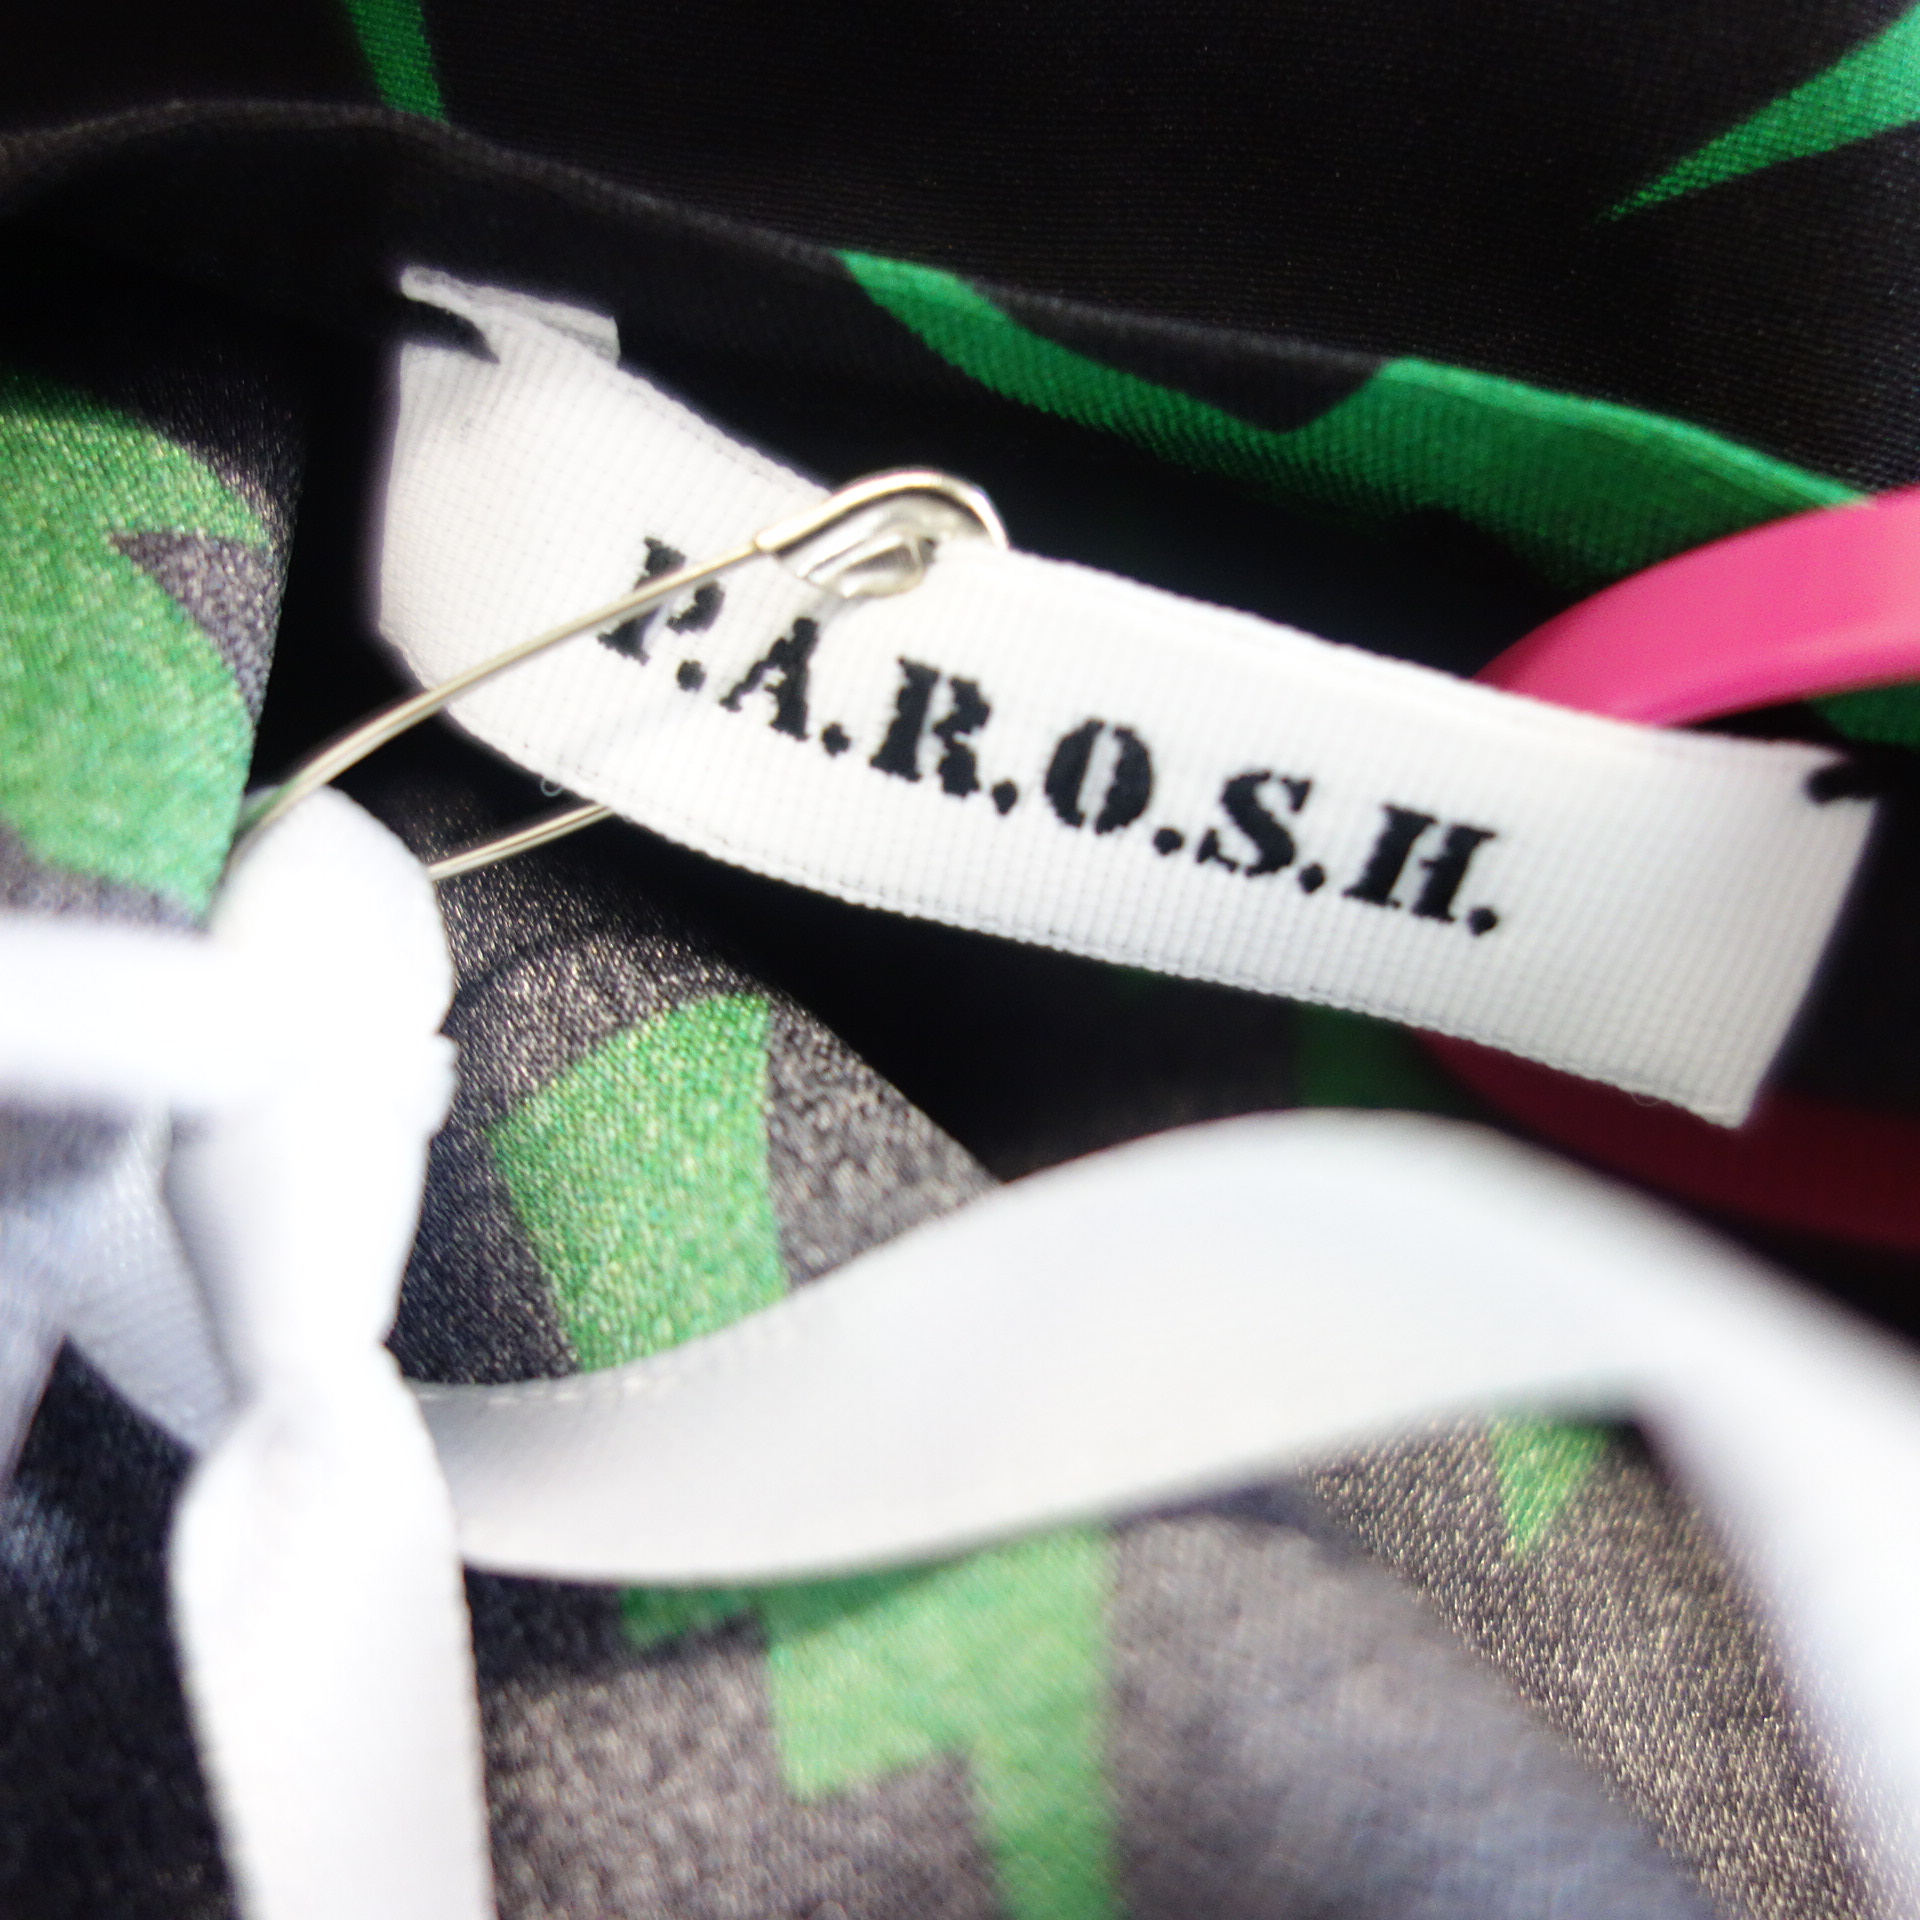 PAROSH P.A.R.O.S.H. Damen Bluse Tunika Shirt Oberteil Schwarz Grün Seide Größe M